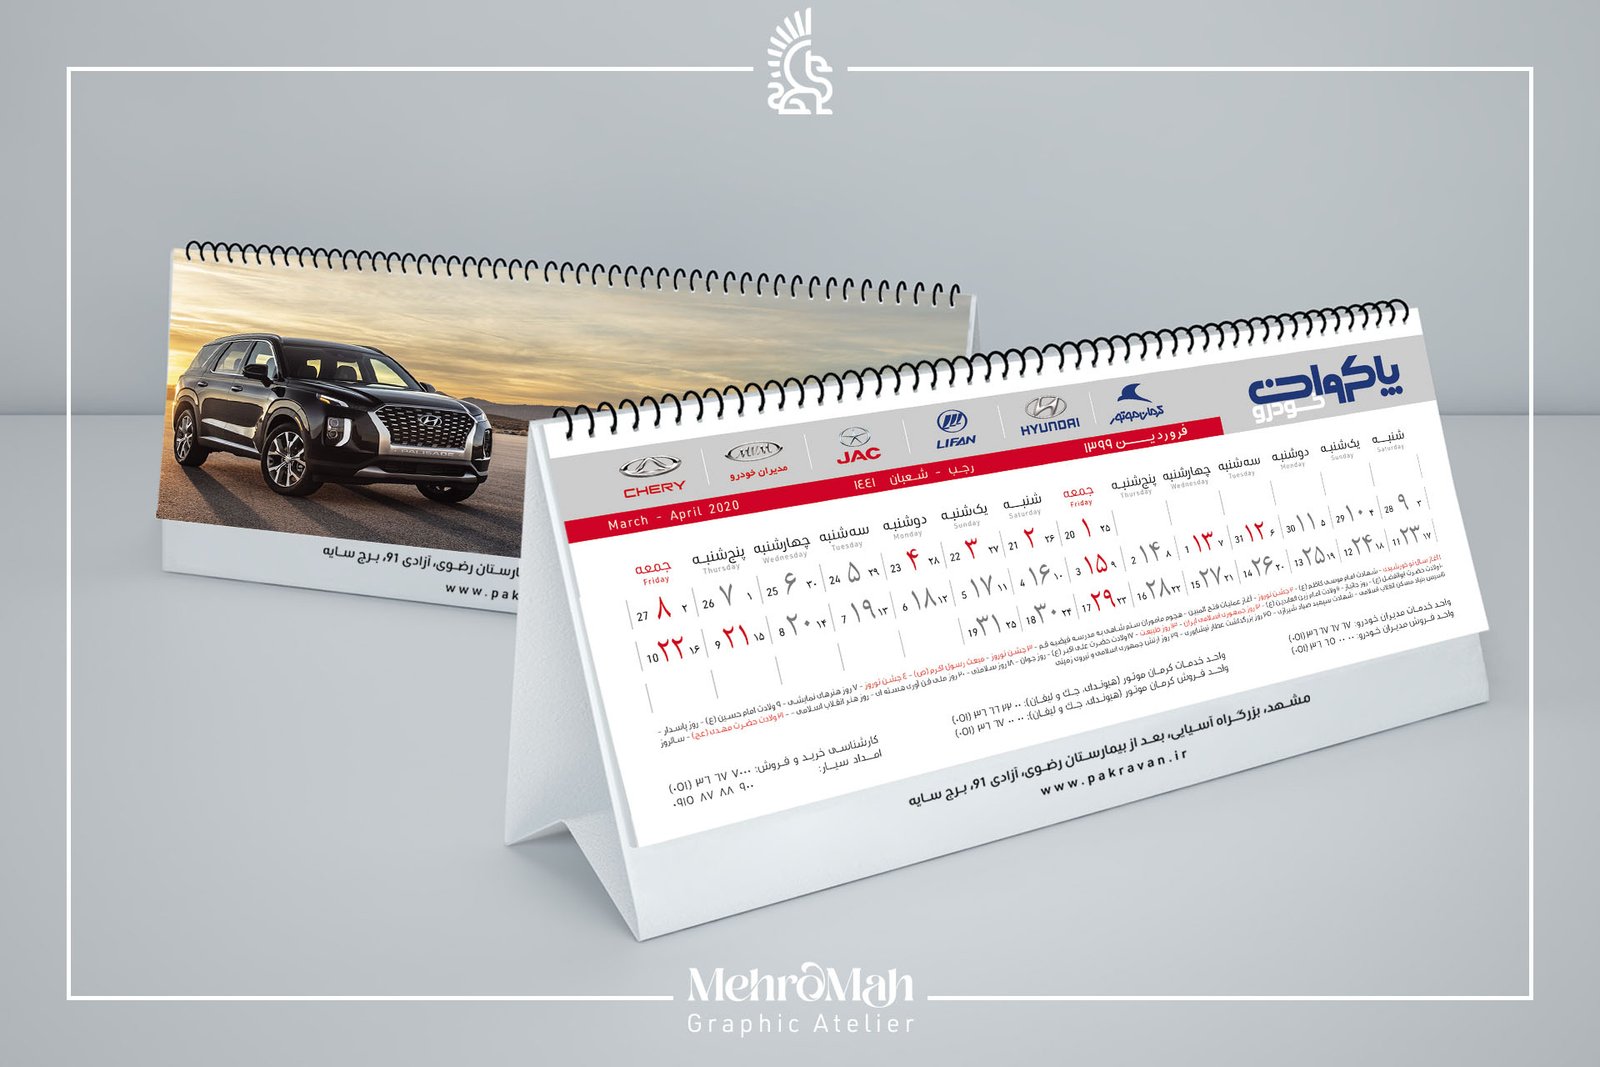 Pakravan Khodro Car Dealer & After-sales Service Desktop Calendar